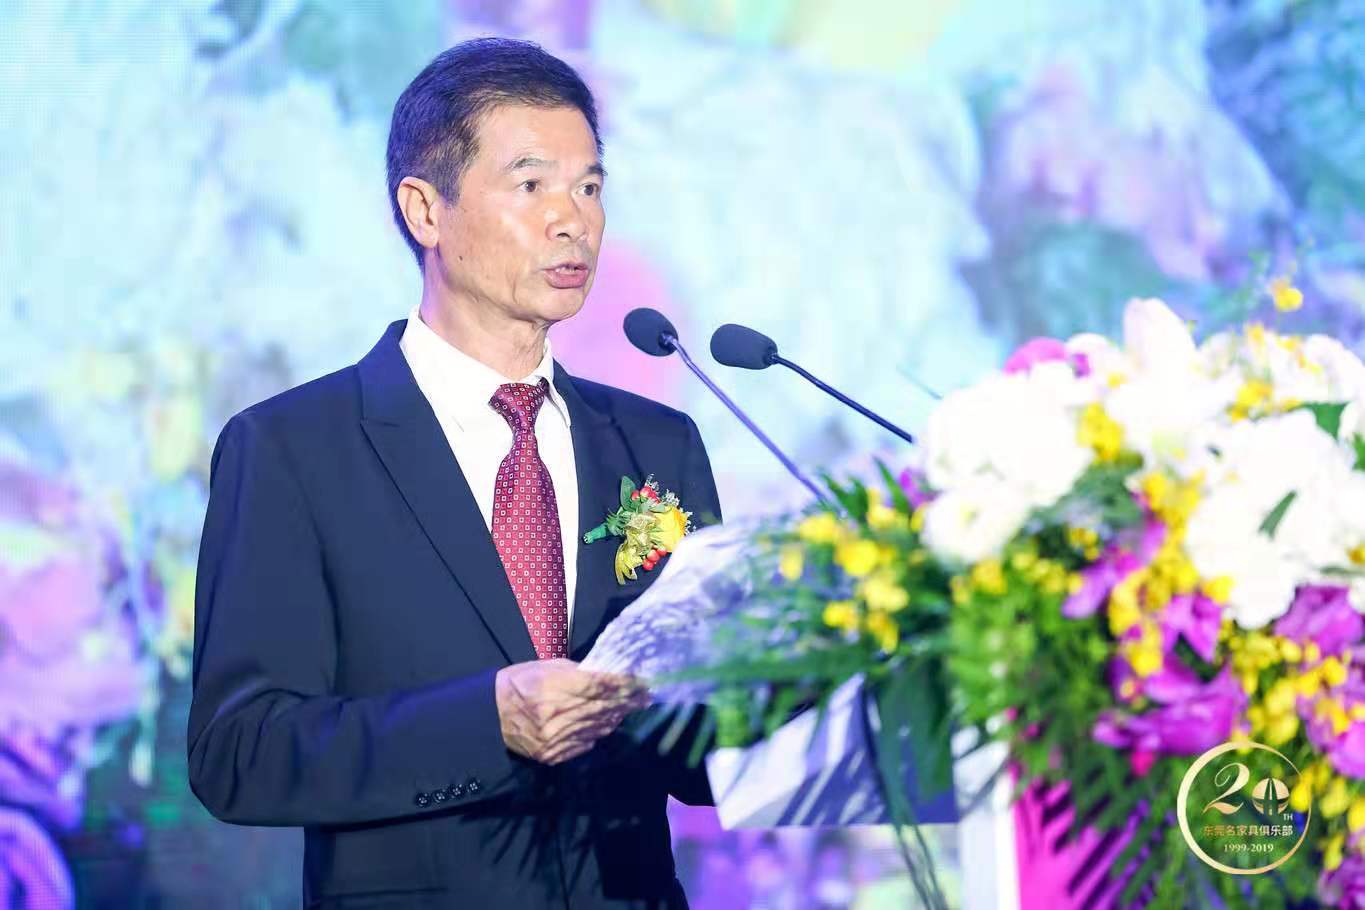 Warm congratulations to Mr. Lin Binghui, Chairman of Huahui Group, for his re-election as Chairman of Dongguan Famous Furniture Club!